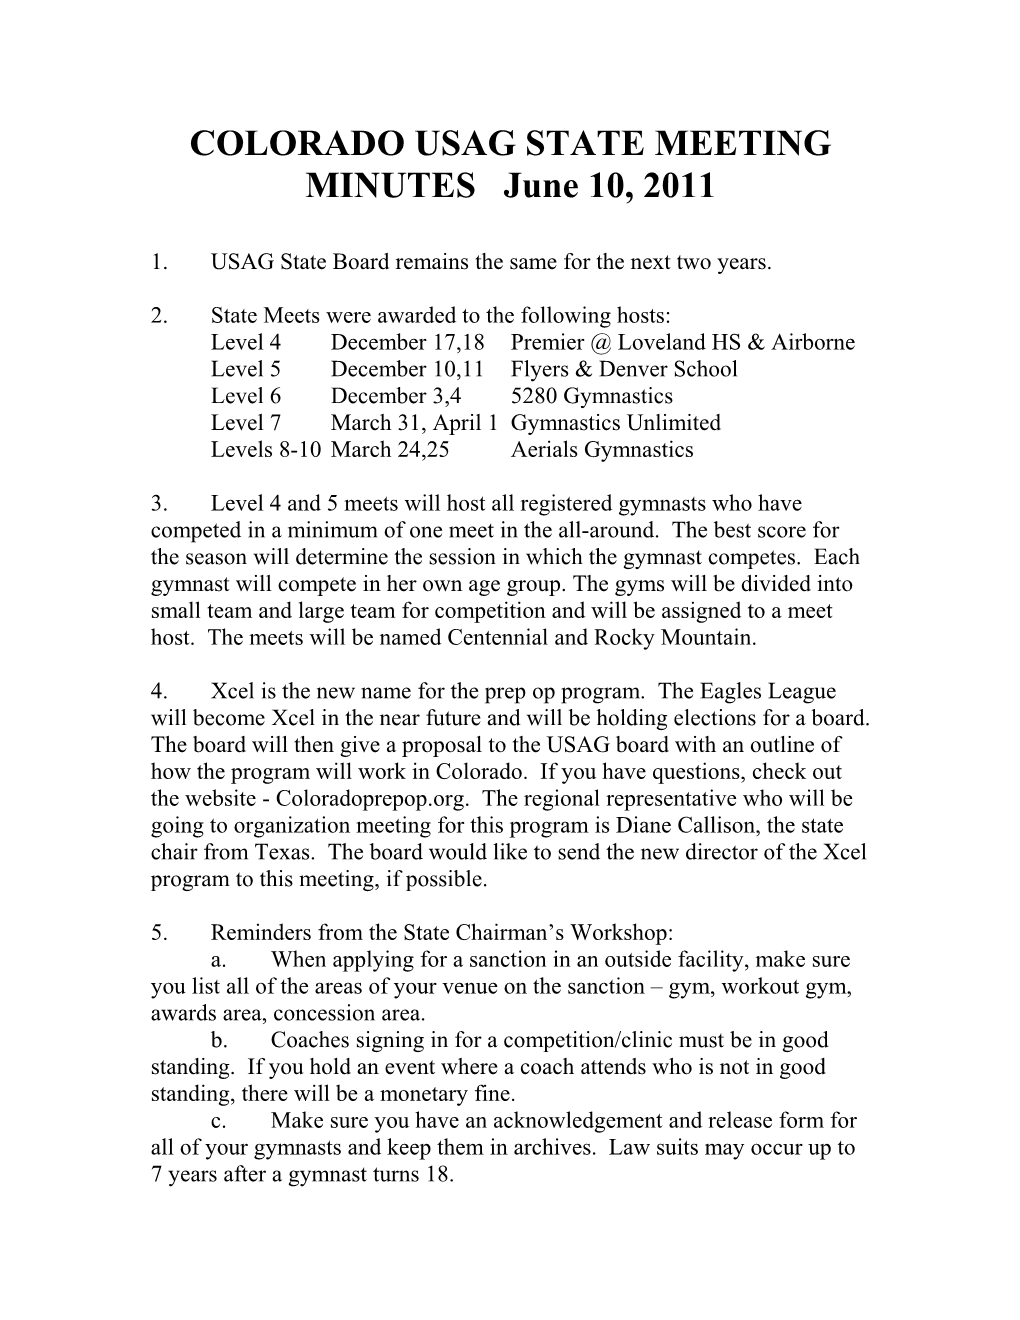 COLORADO USAG STATE MEETING MINUTES June 10, 2011